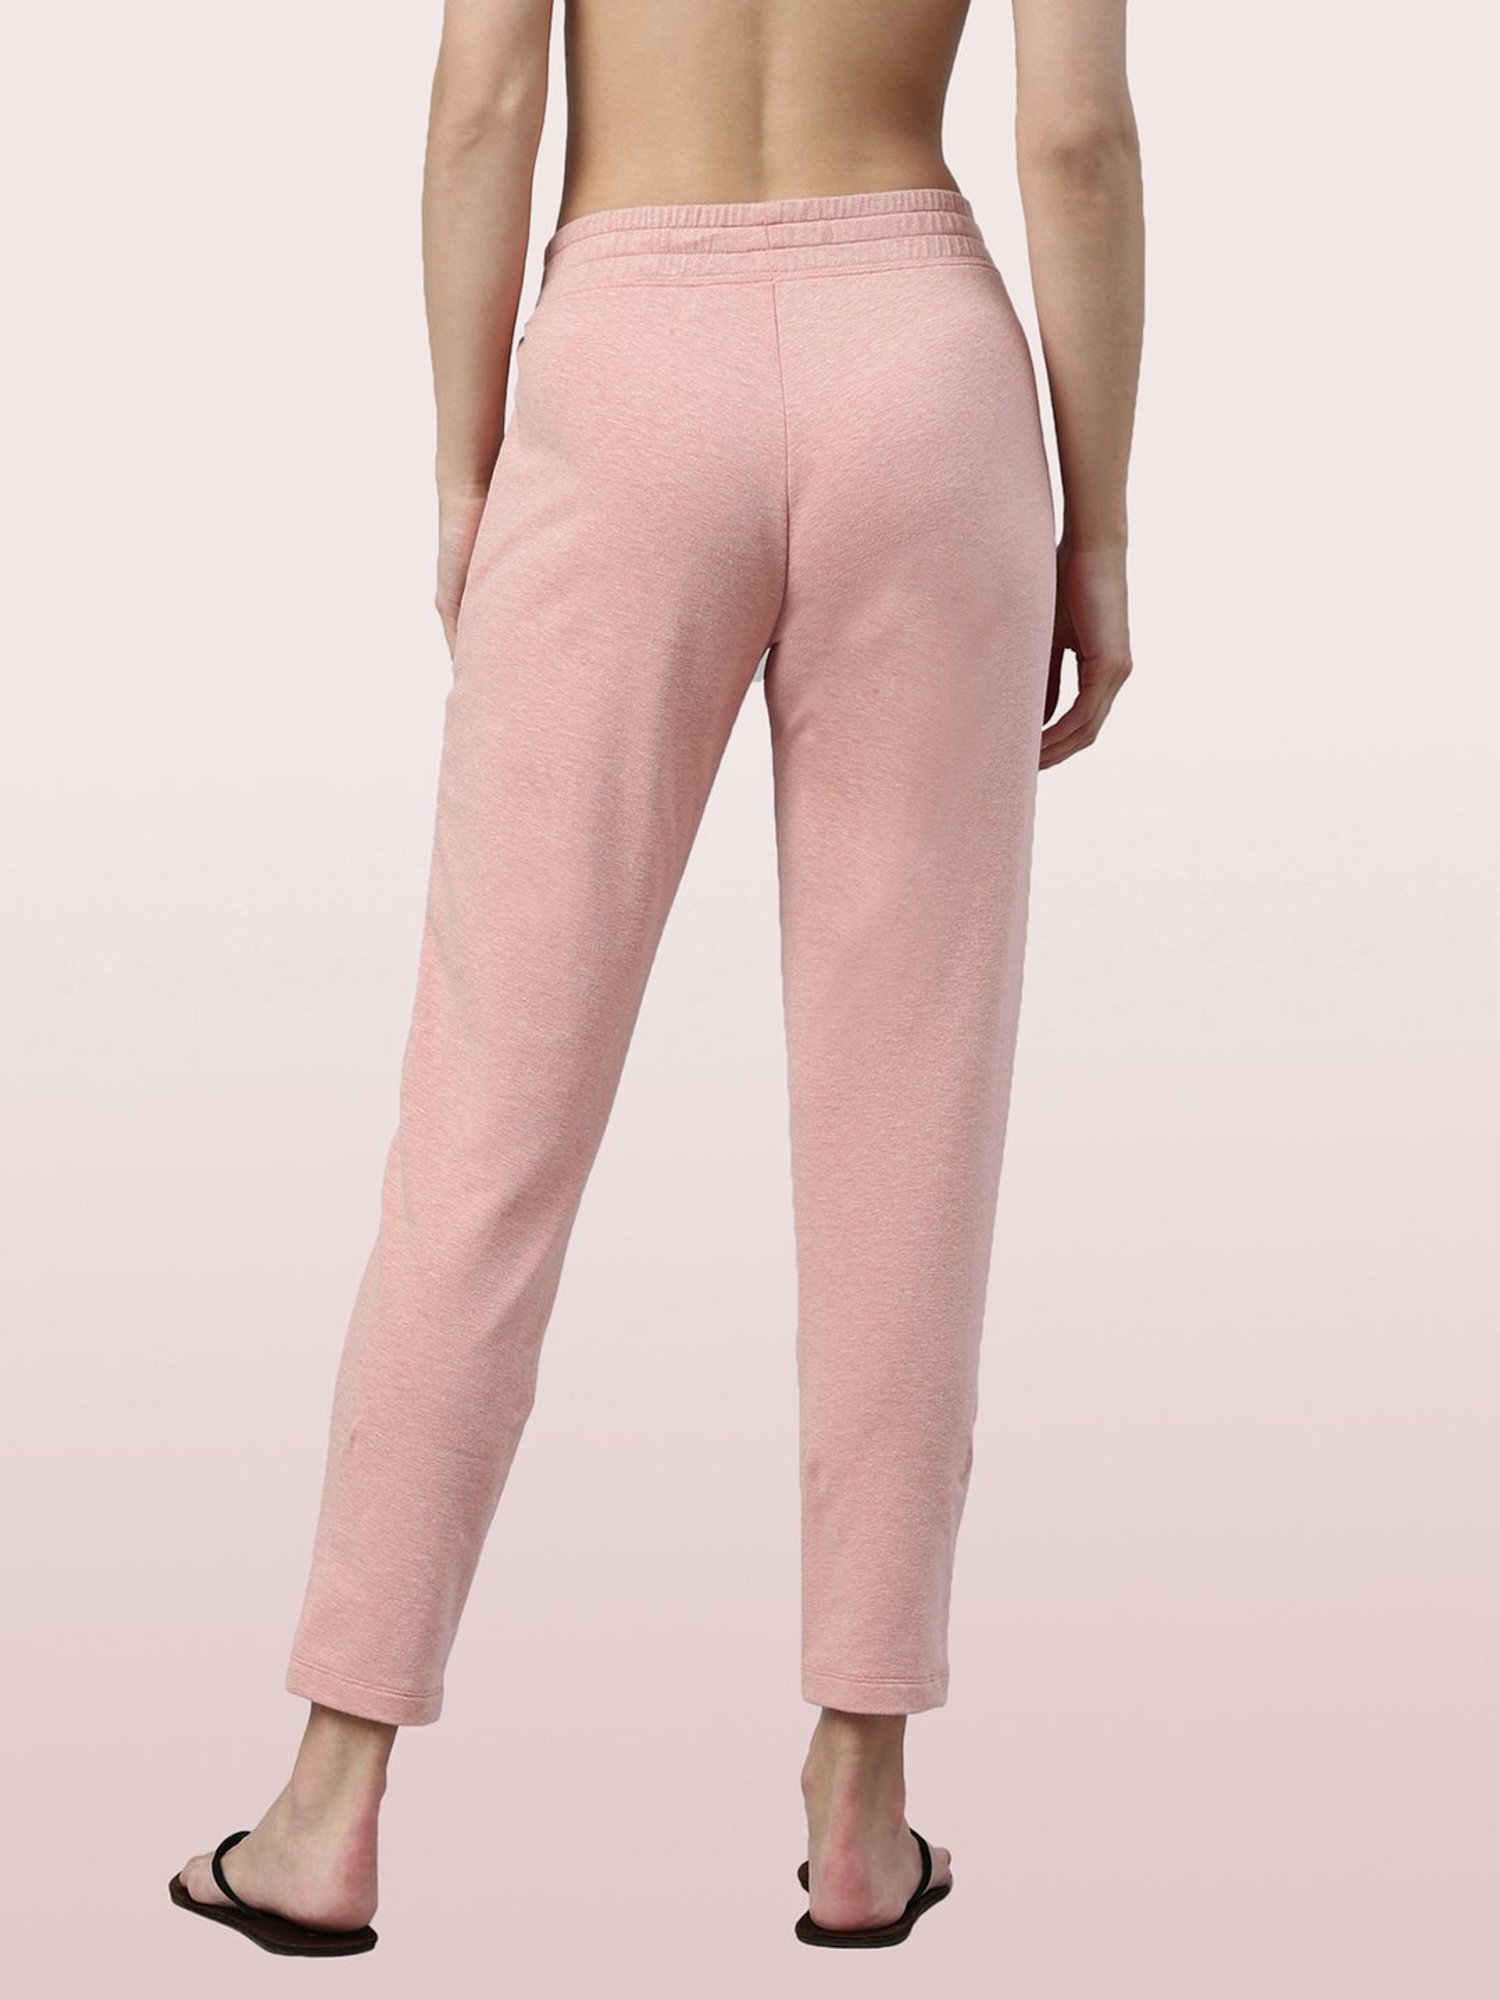 Buy Jockey Pink Lounge Pants for Women's Online @ Tata CLiQ